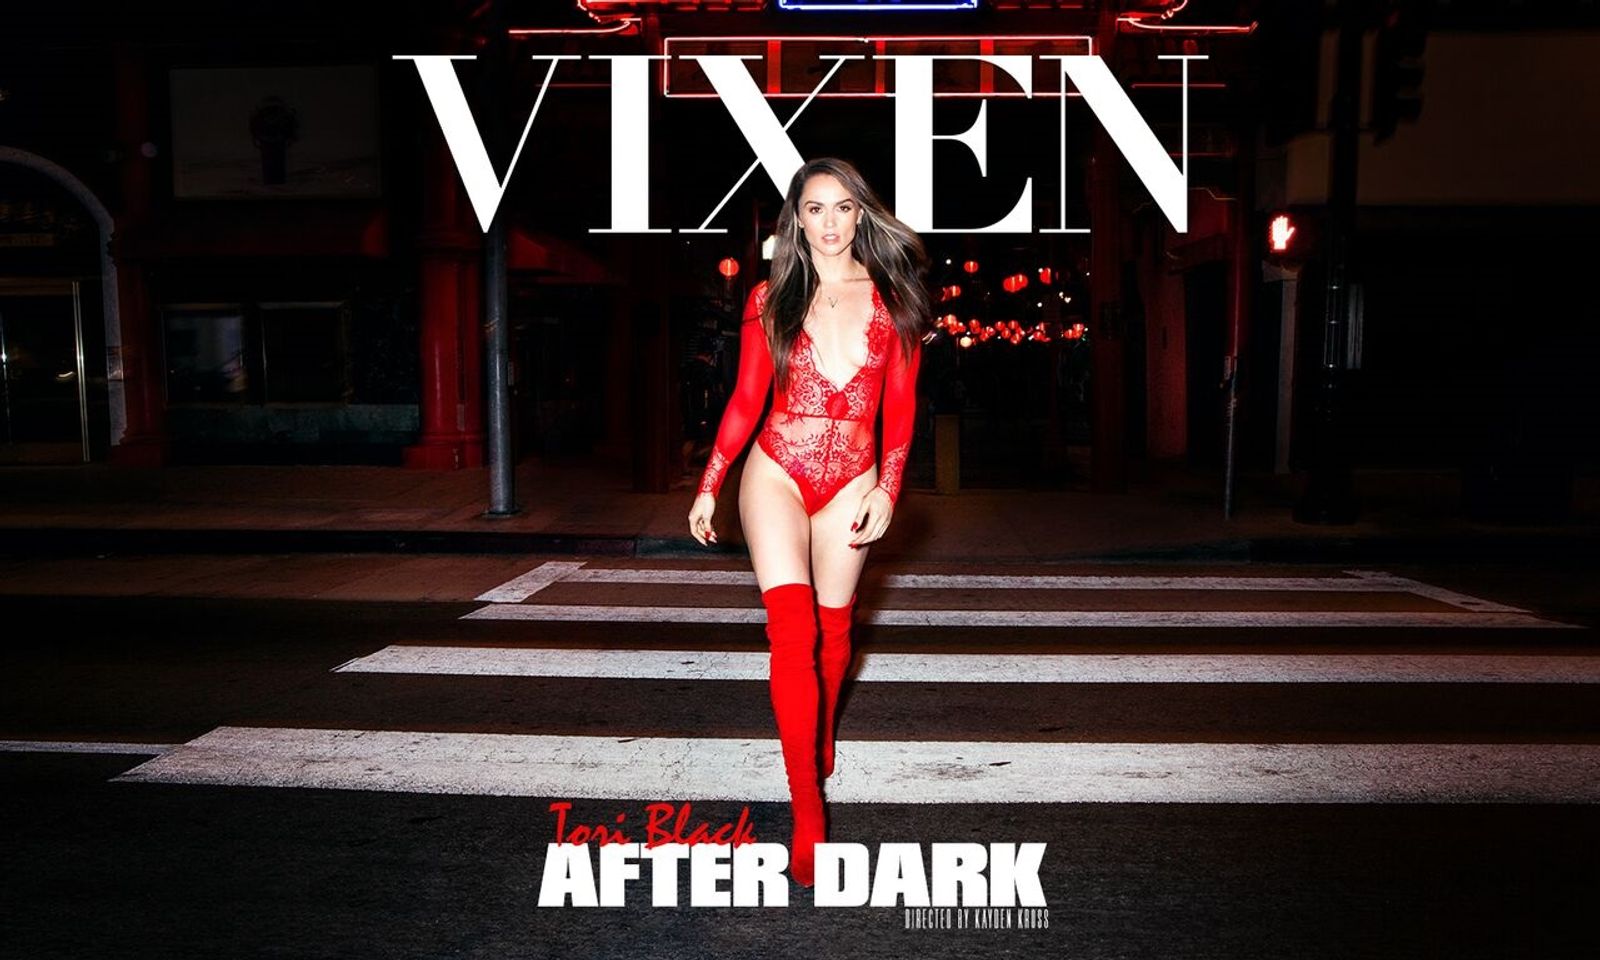 Tori Black Stars in First Vixen Feature 'After Dark'